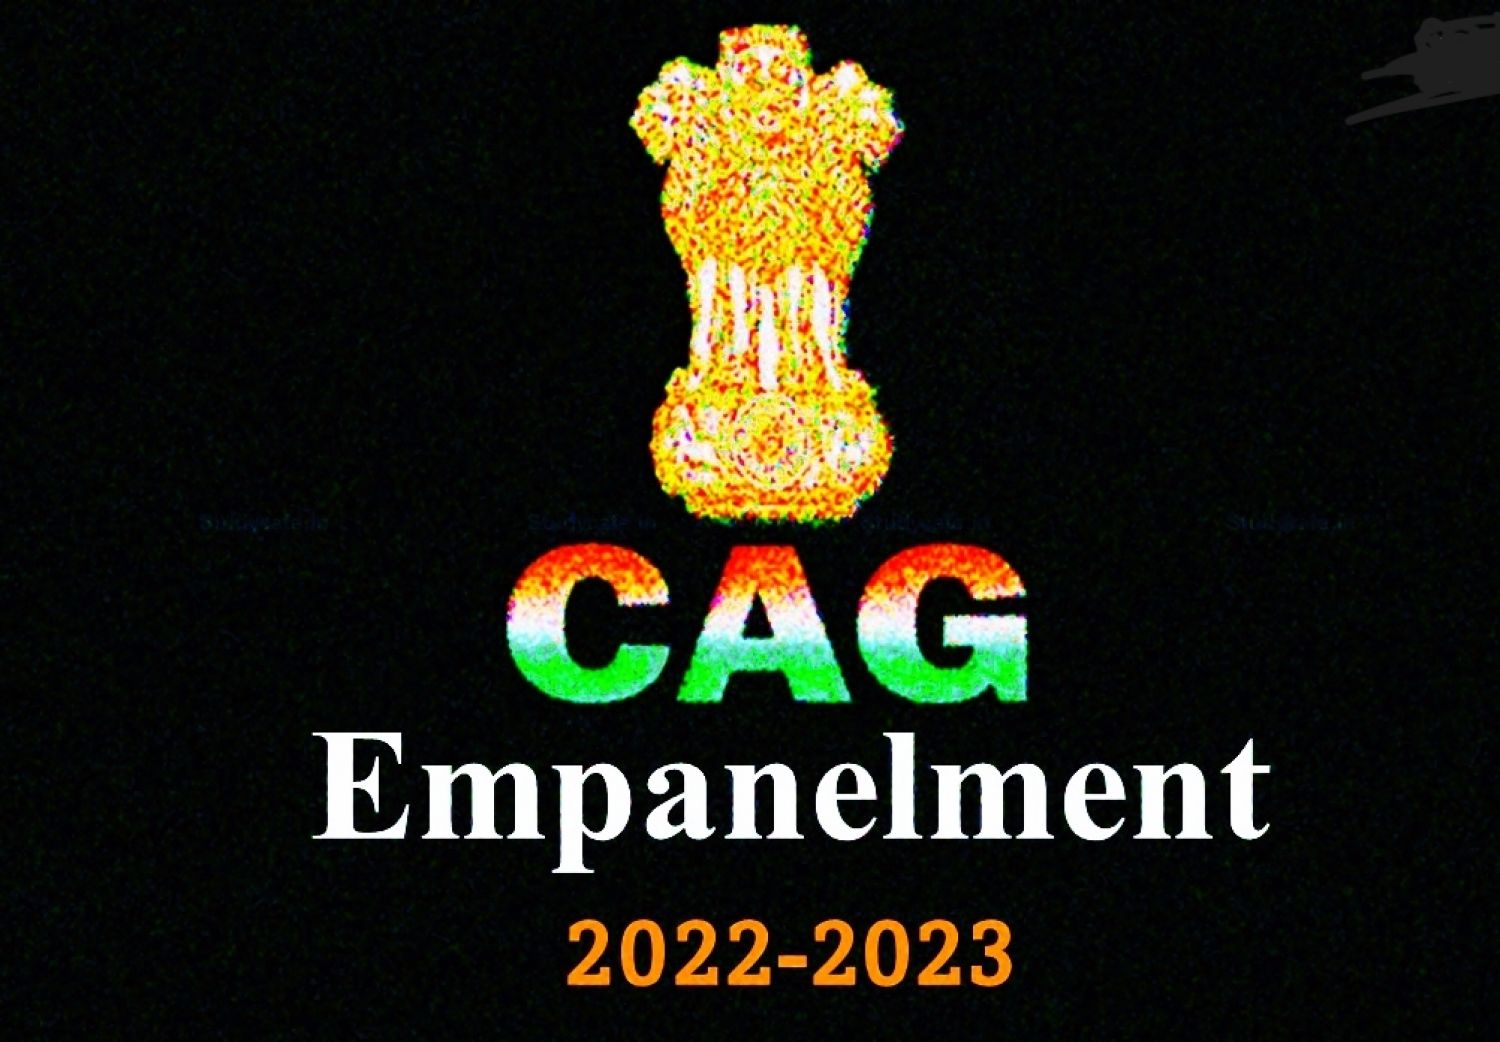 CA's can check C&AG Provisional Empanelment Status for FY 2022-2023